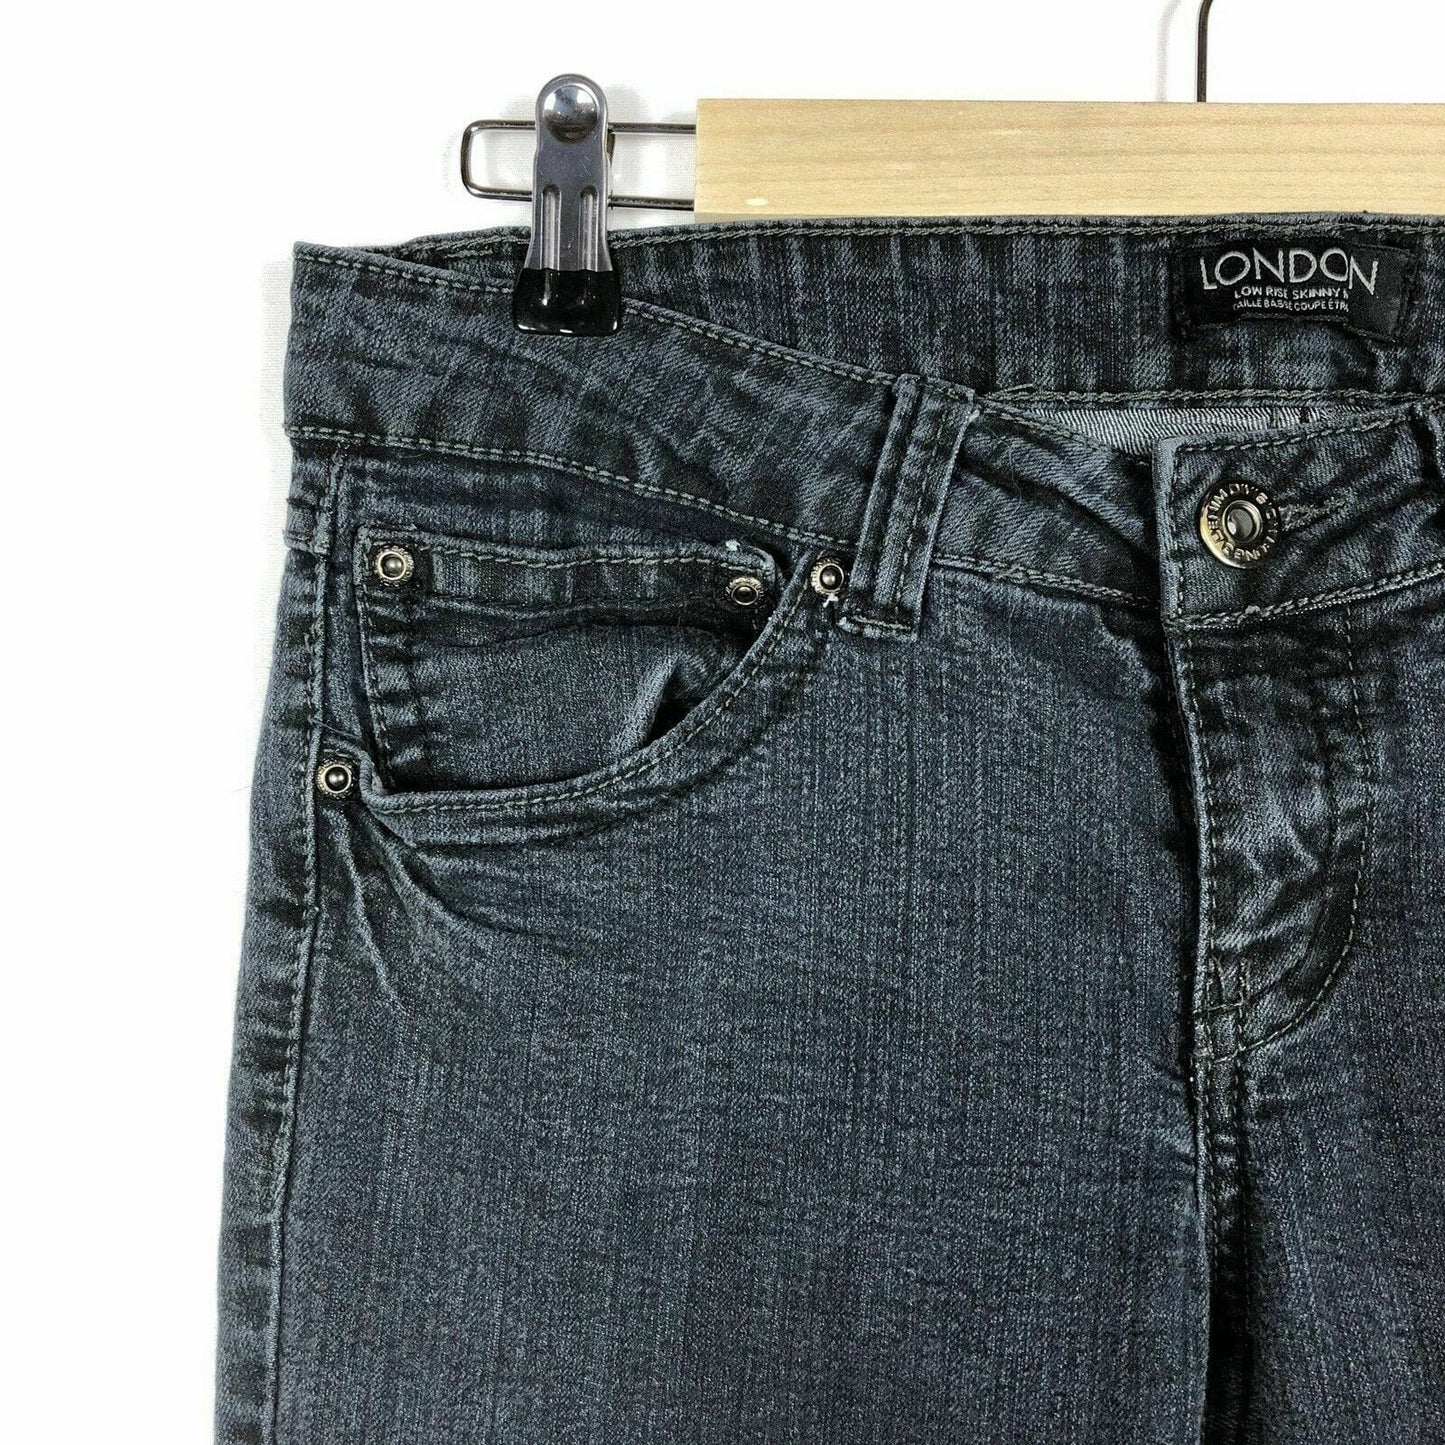 Trendy London Juniors Black Skinny Jeans Size 9 - Versatile & Durable